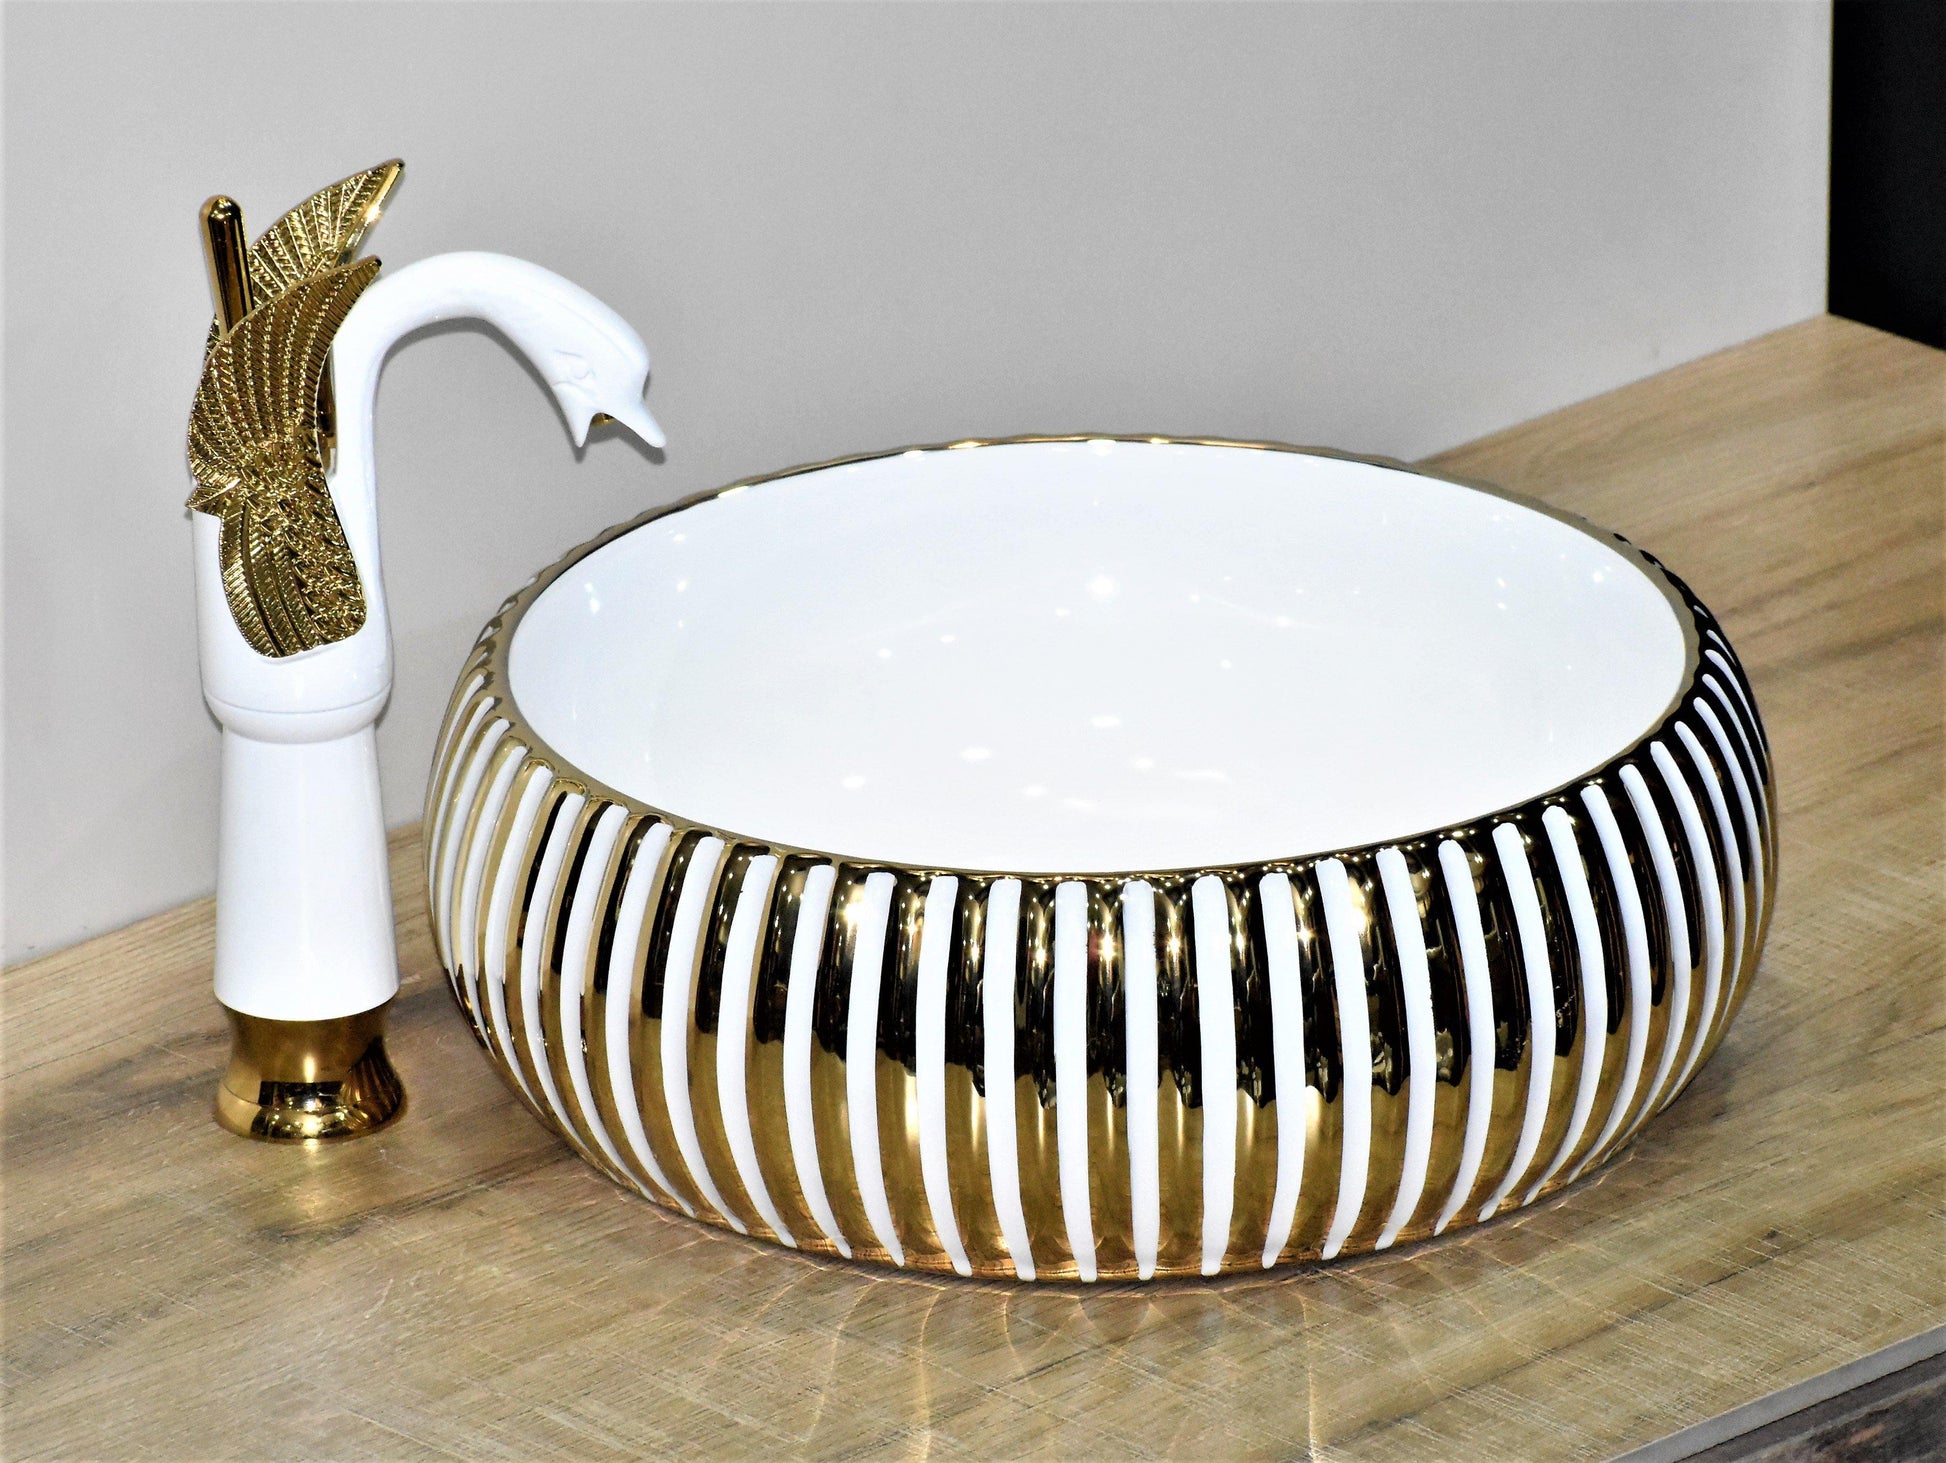 Designer Ceramic Wash Basin Vessel Sink Over or Above Counter Top Wash Basin for Bathroom Round Shape Gold White 40 x 40 x 14 cm - Bath Outlet